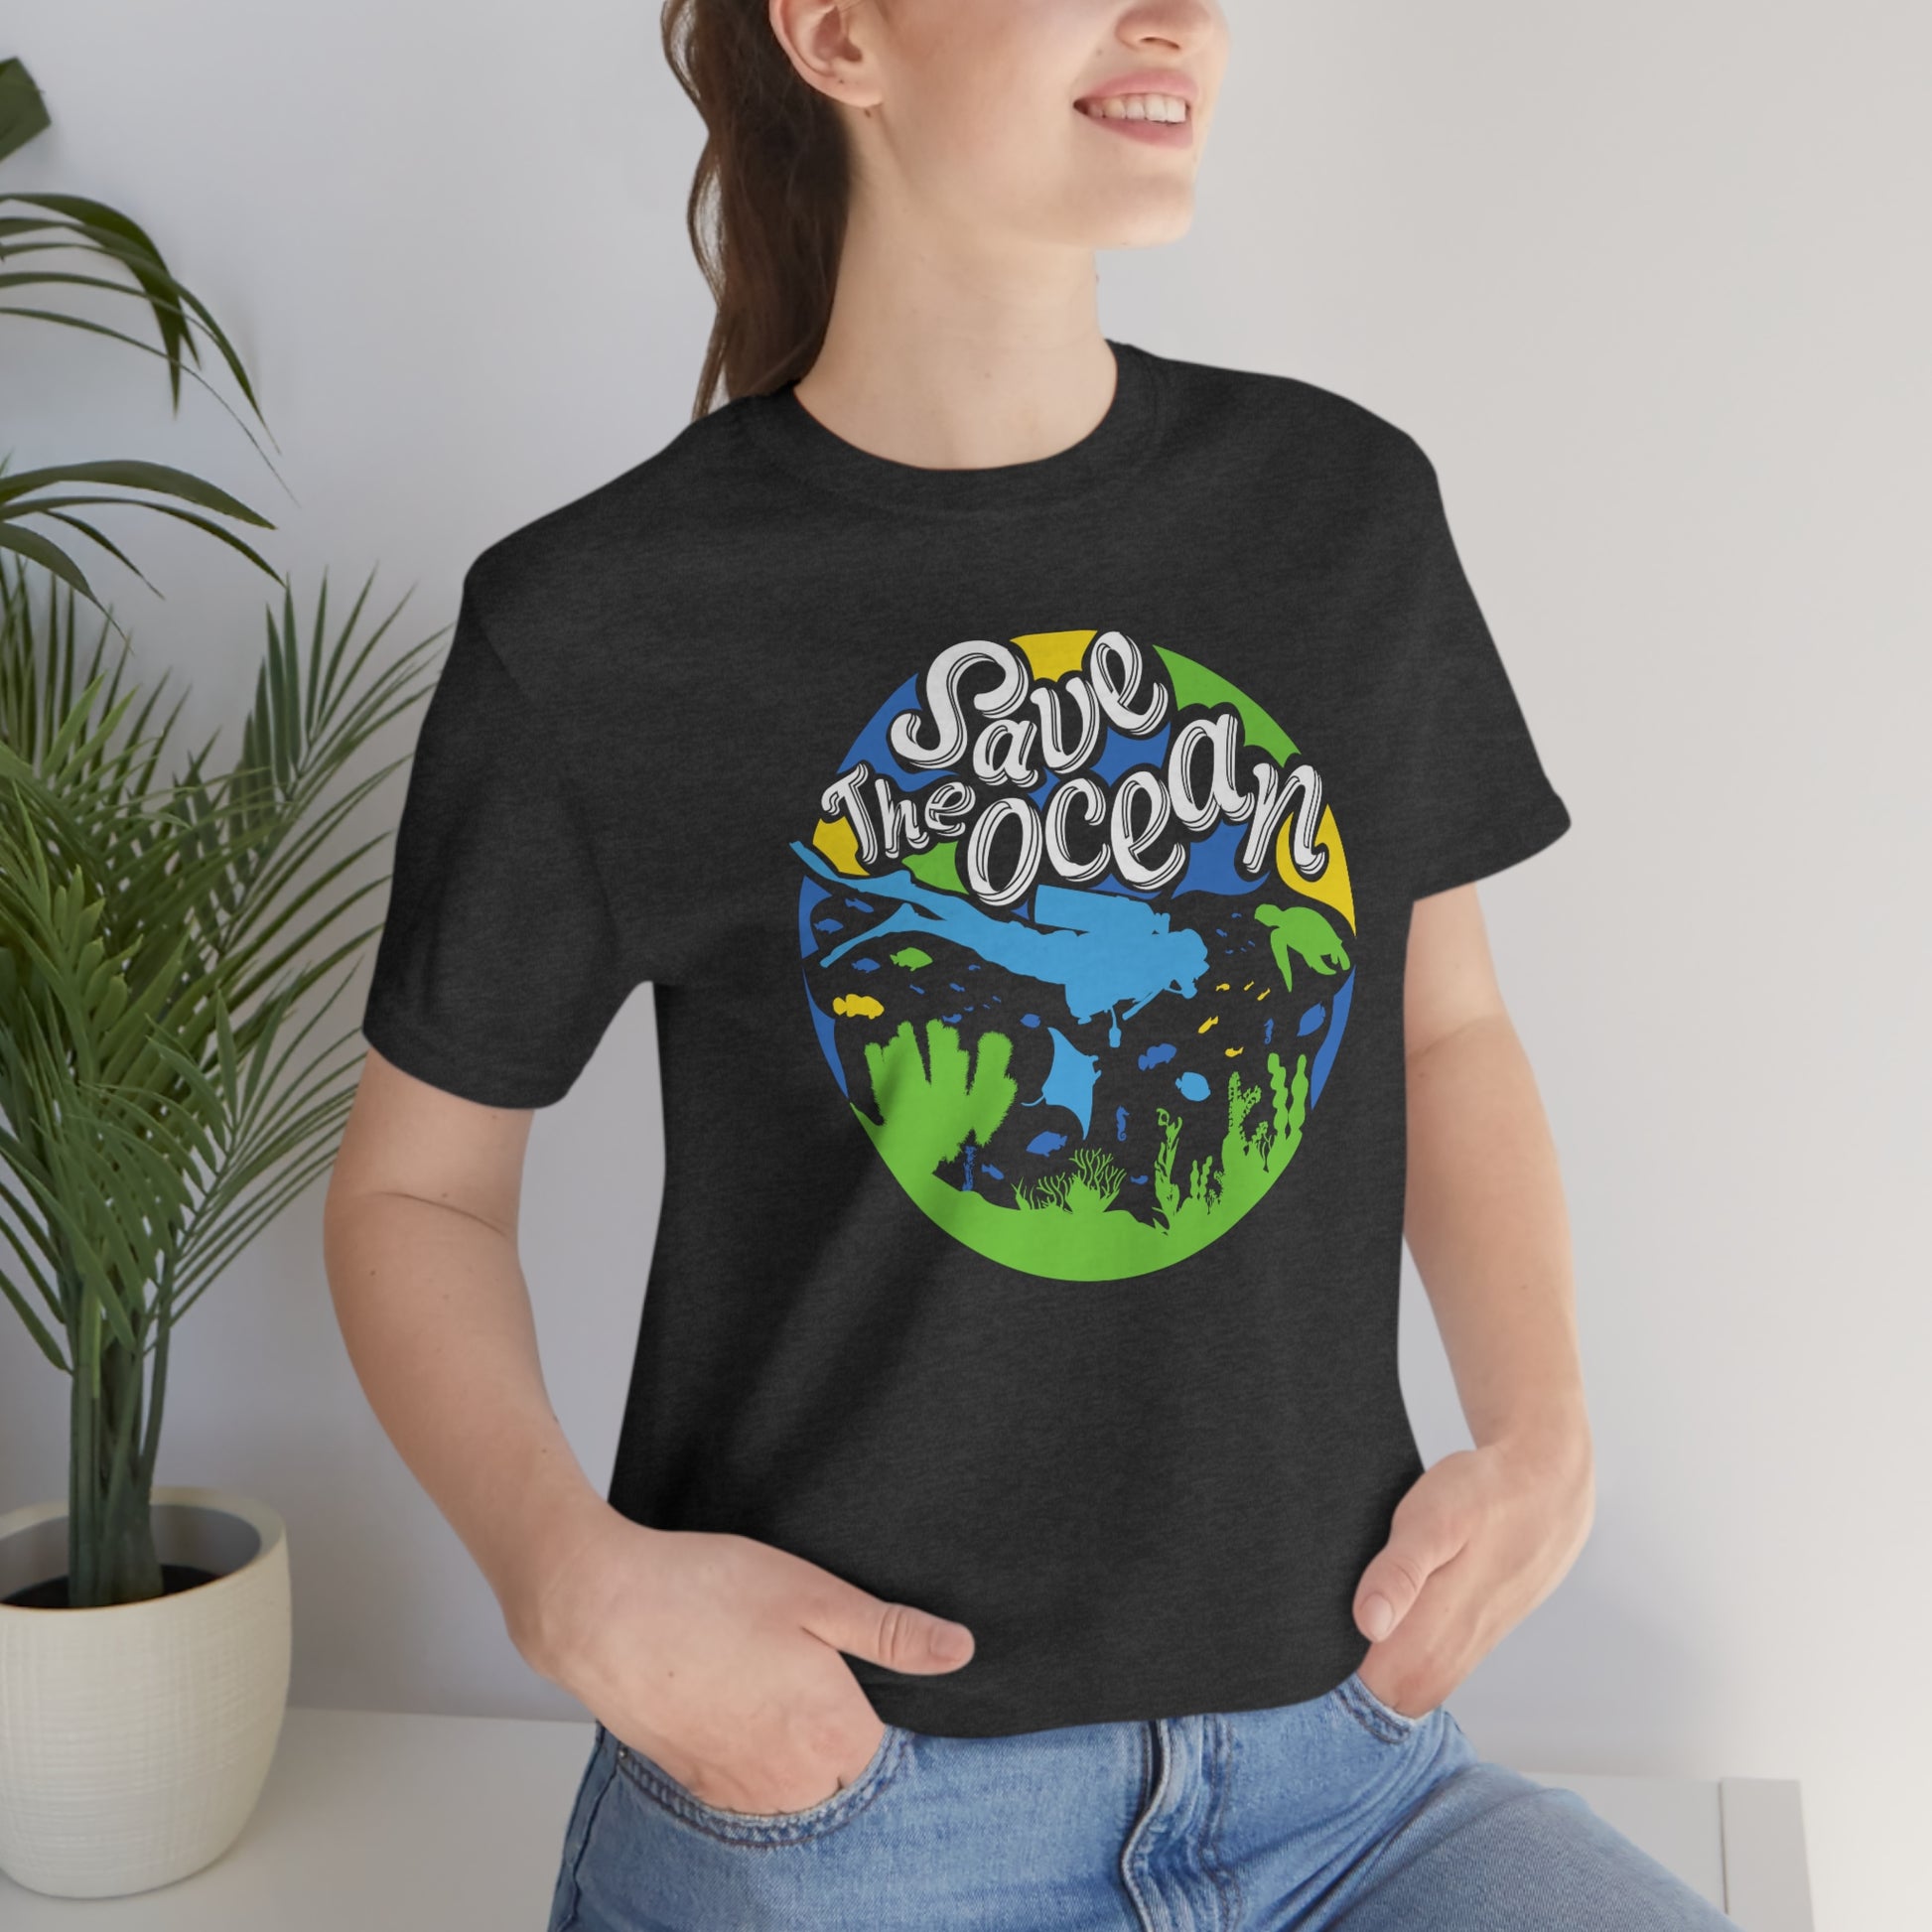 Save The Ocean Tshirt, Diving Conservation Turtles Sea Art Environmental Men Women Adult Aesthetic Graphic Crewneck Tee Shirt Top Starcove Fashion